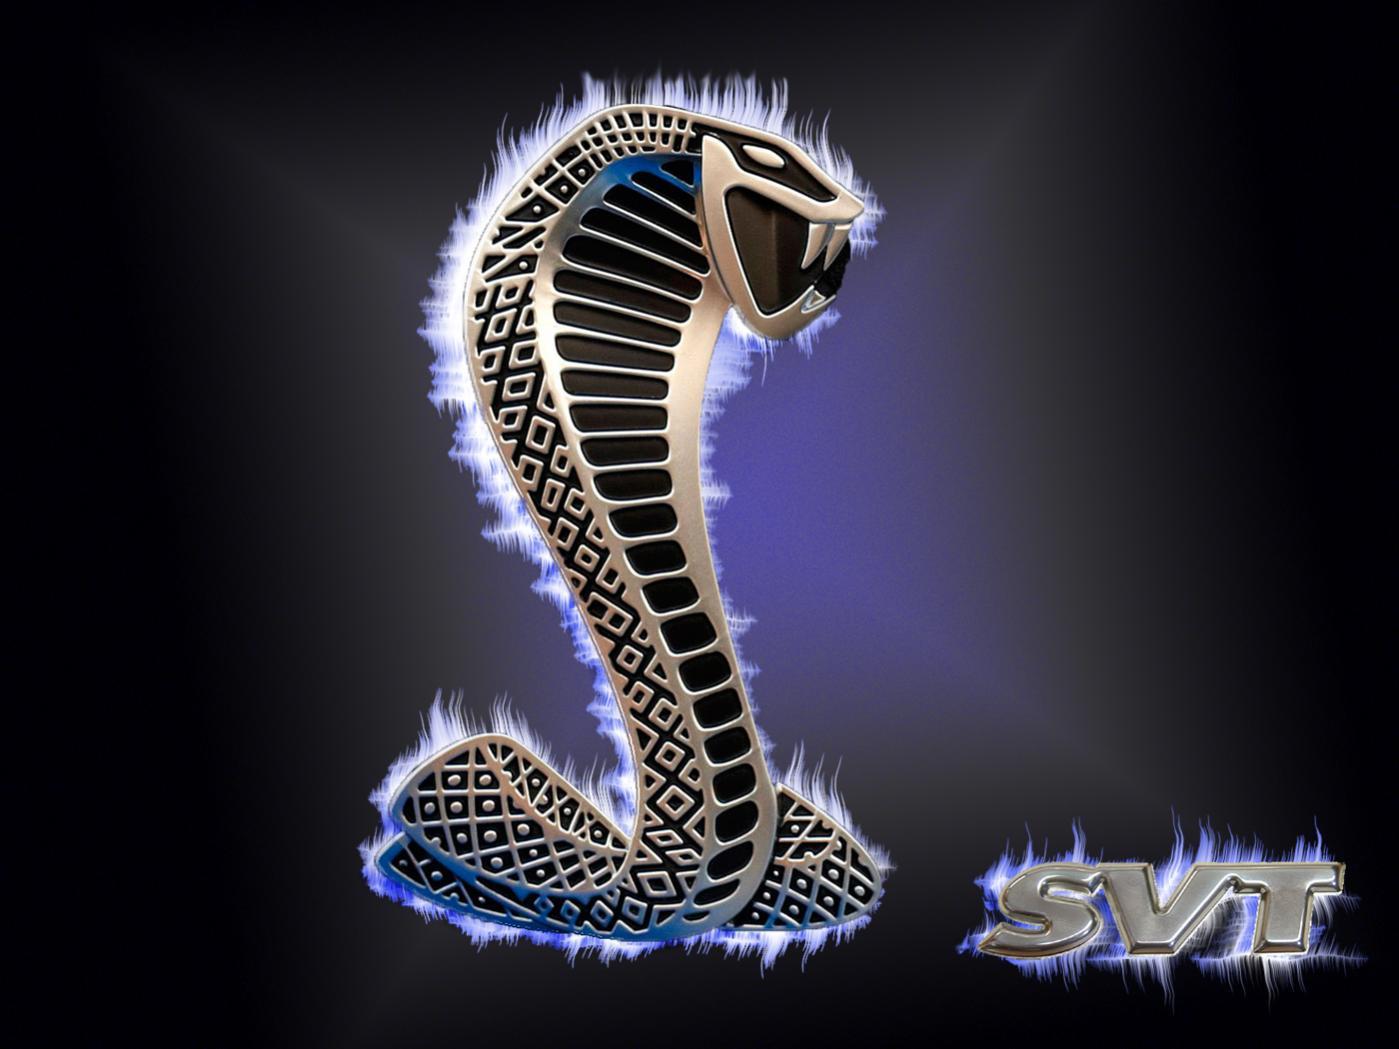 Logo Shelby Cobra vector stock vector. Illustration of element - 166009570